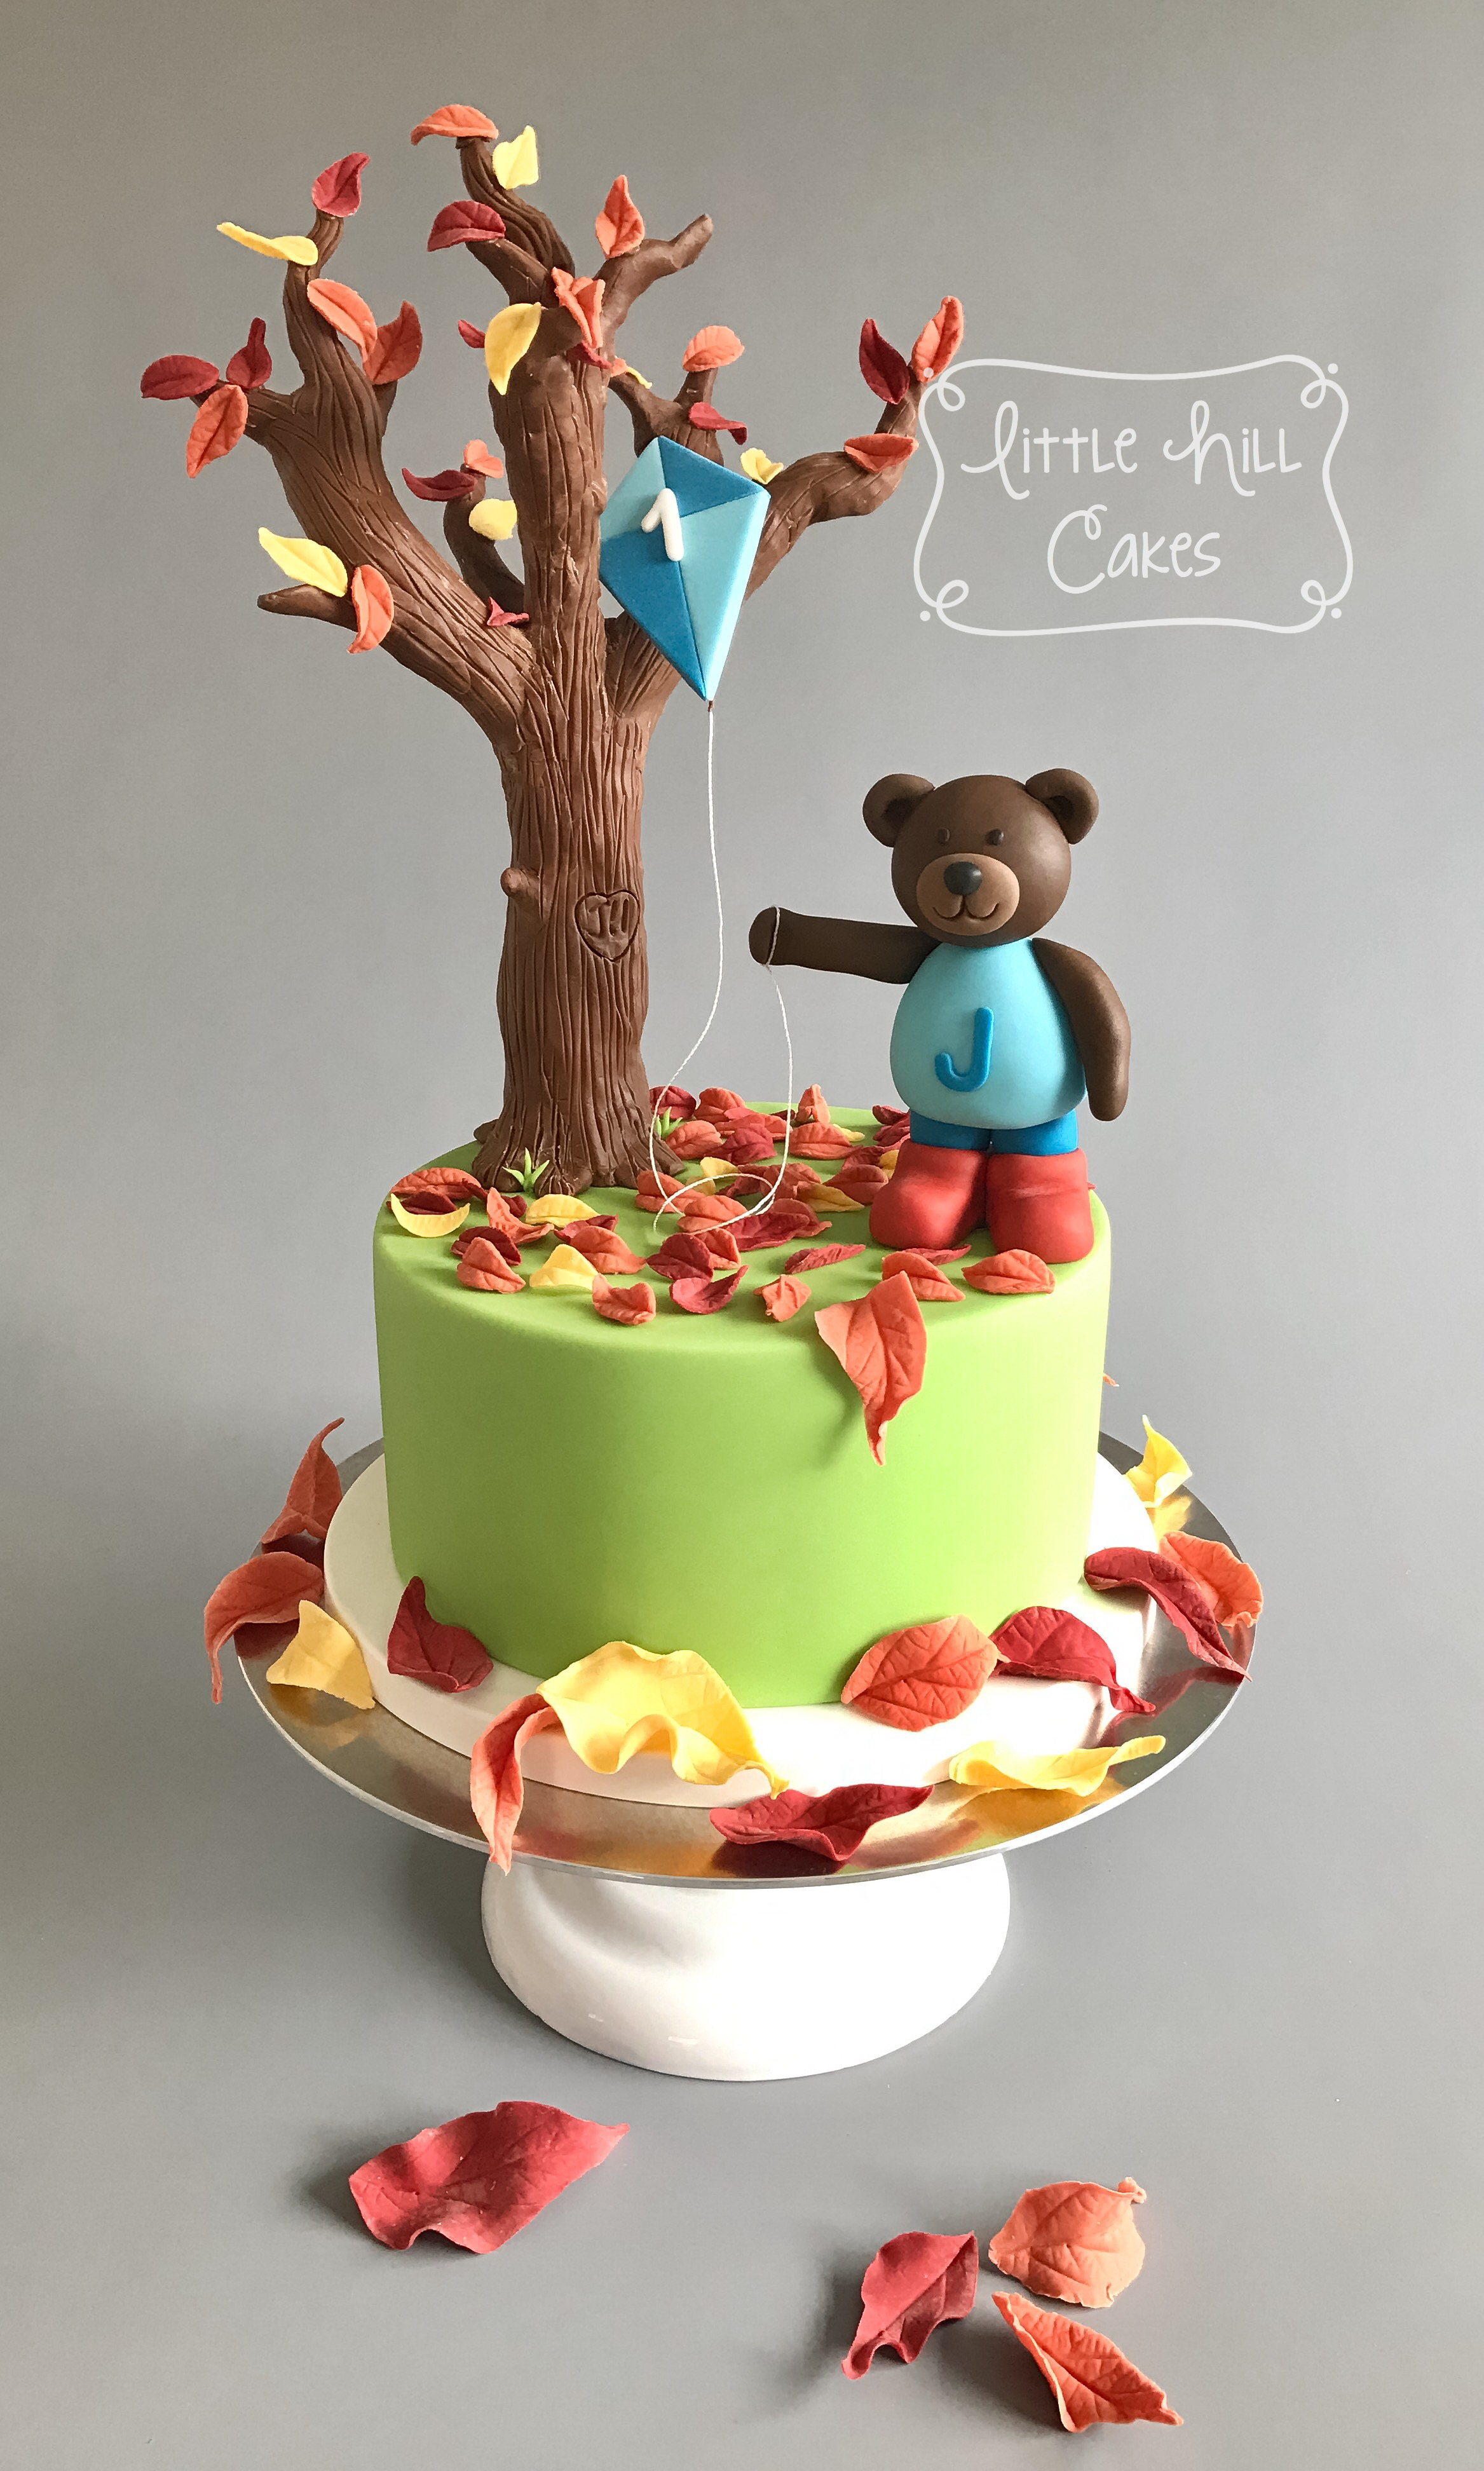 File:Teddy Bear Cake for 5th birthday.jpg - Wikipedia